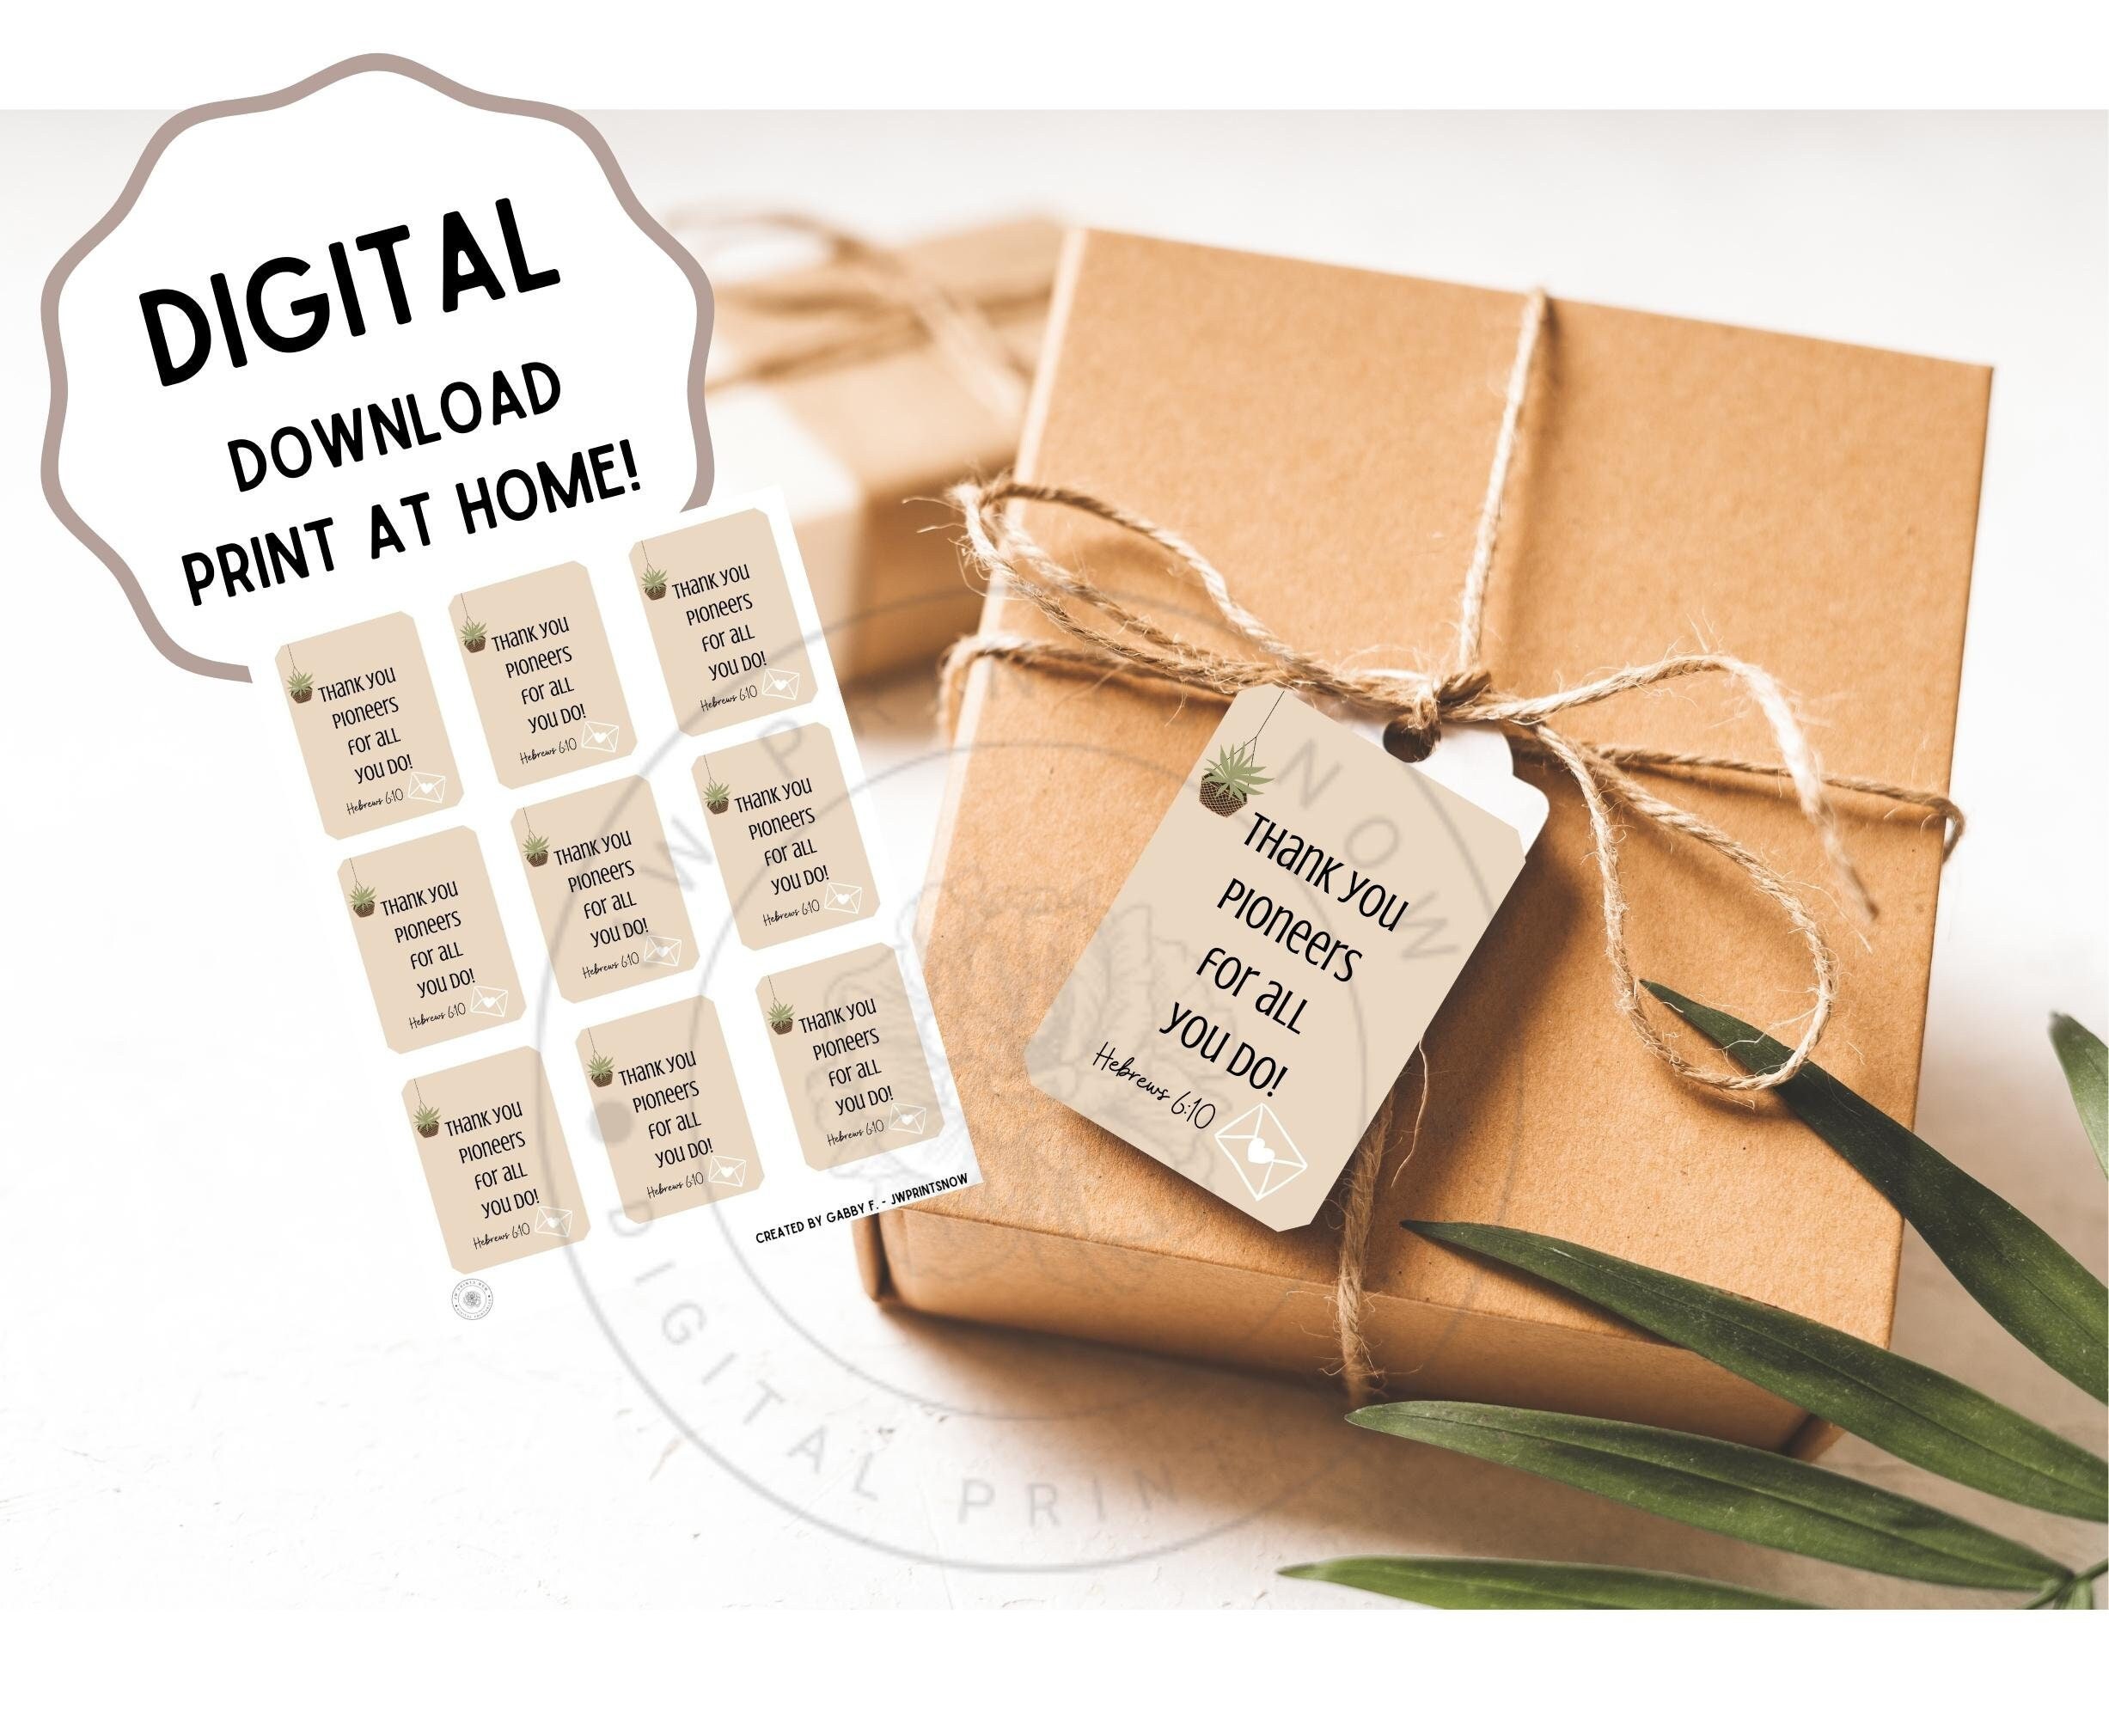 Pioneer School Gift Bag and Tag/pioneer Gift/ JW Gift/ Printable Labels/  Digital Download (Download Now) 